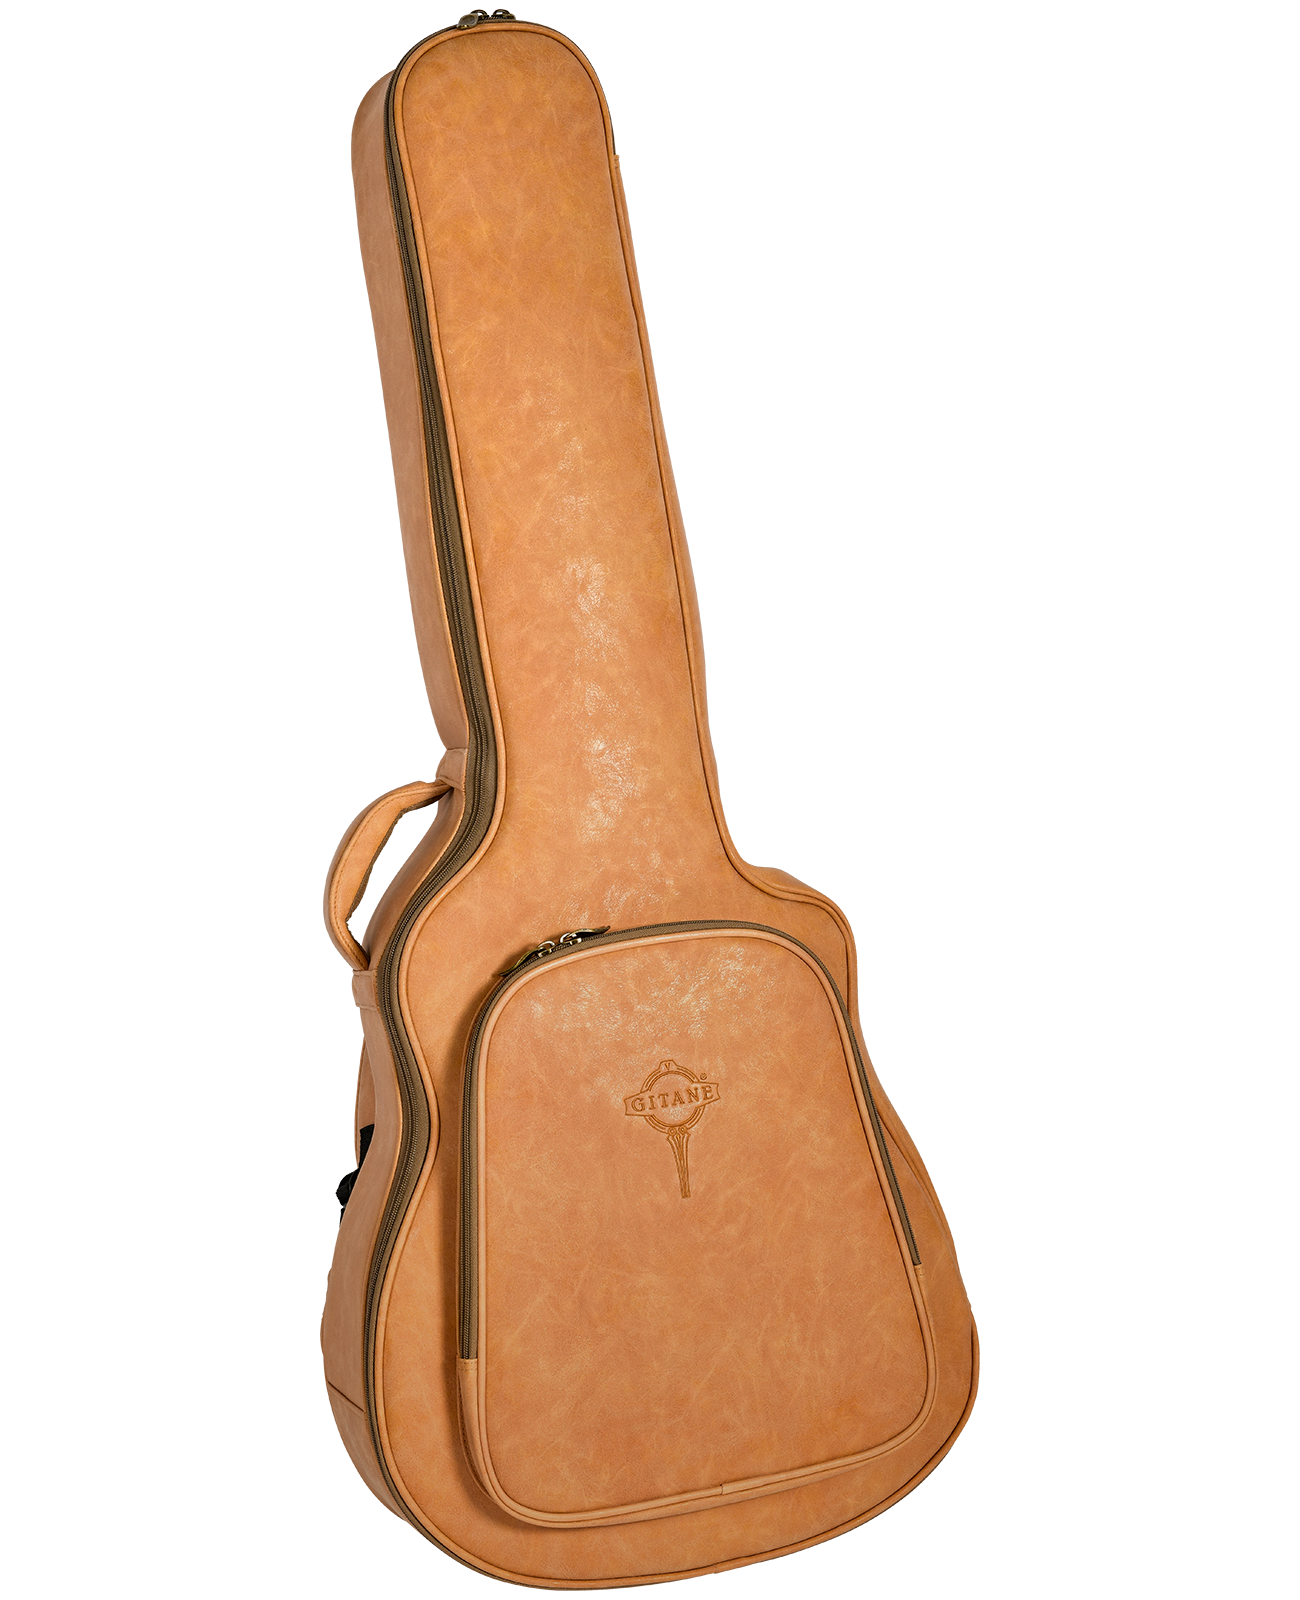 Gitane Django Guitar: DG-255 Oval Hole Gypsy Jazz Guitars Lark in the Morning   